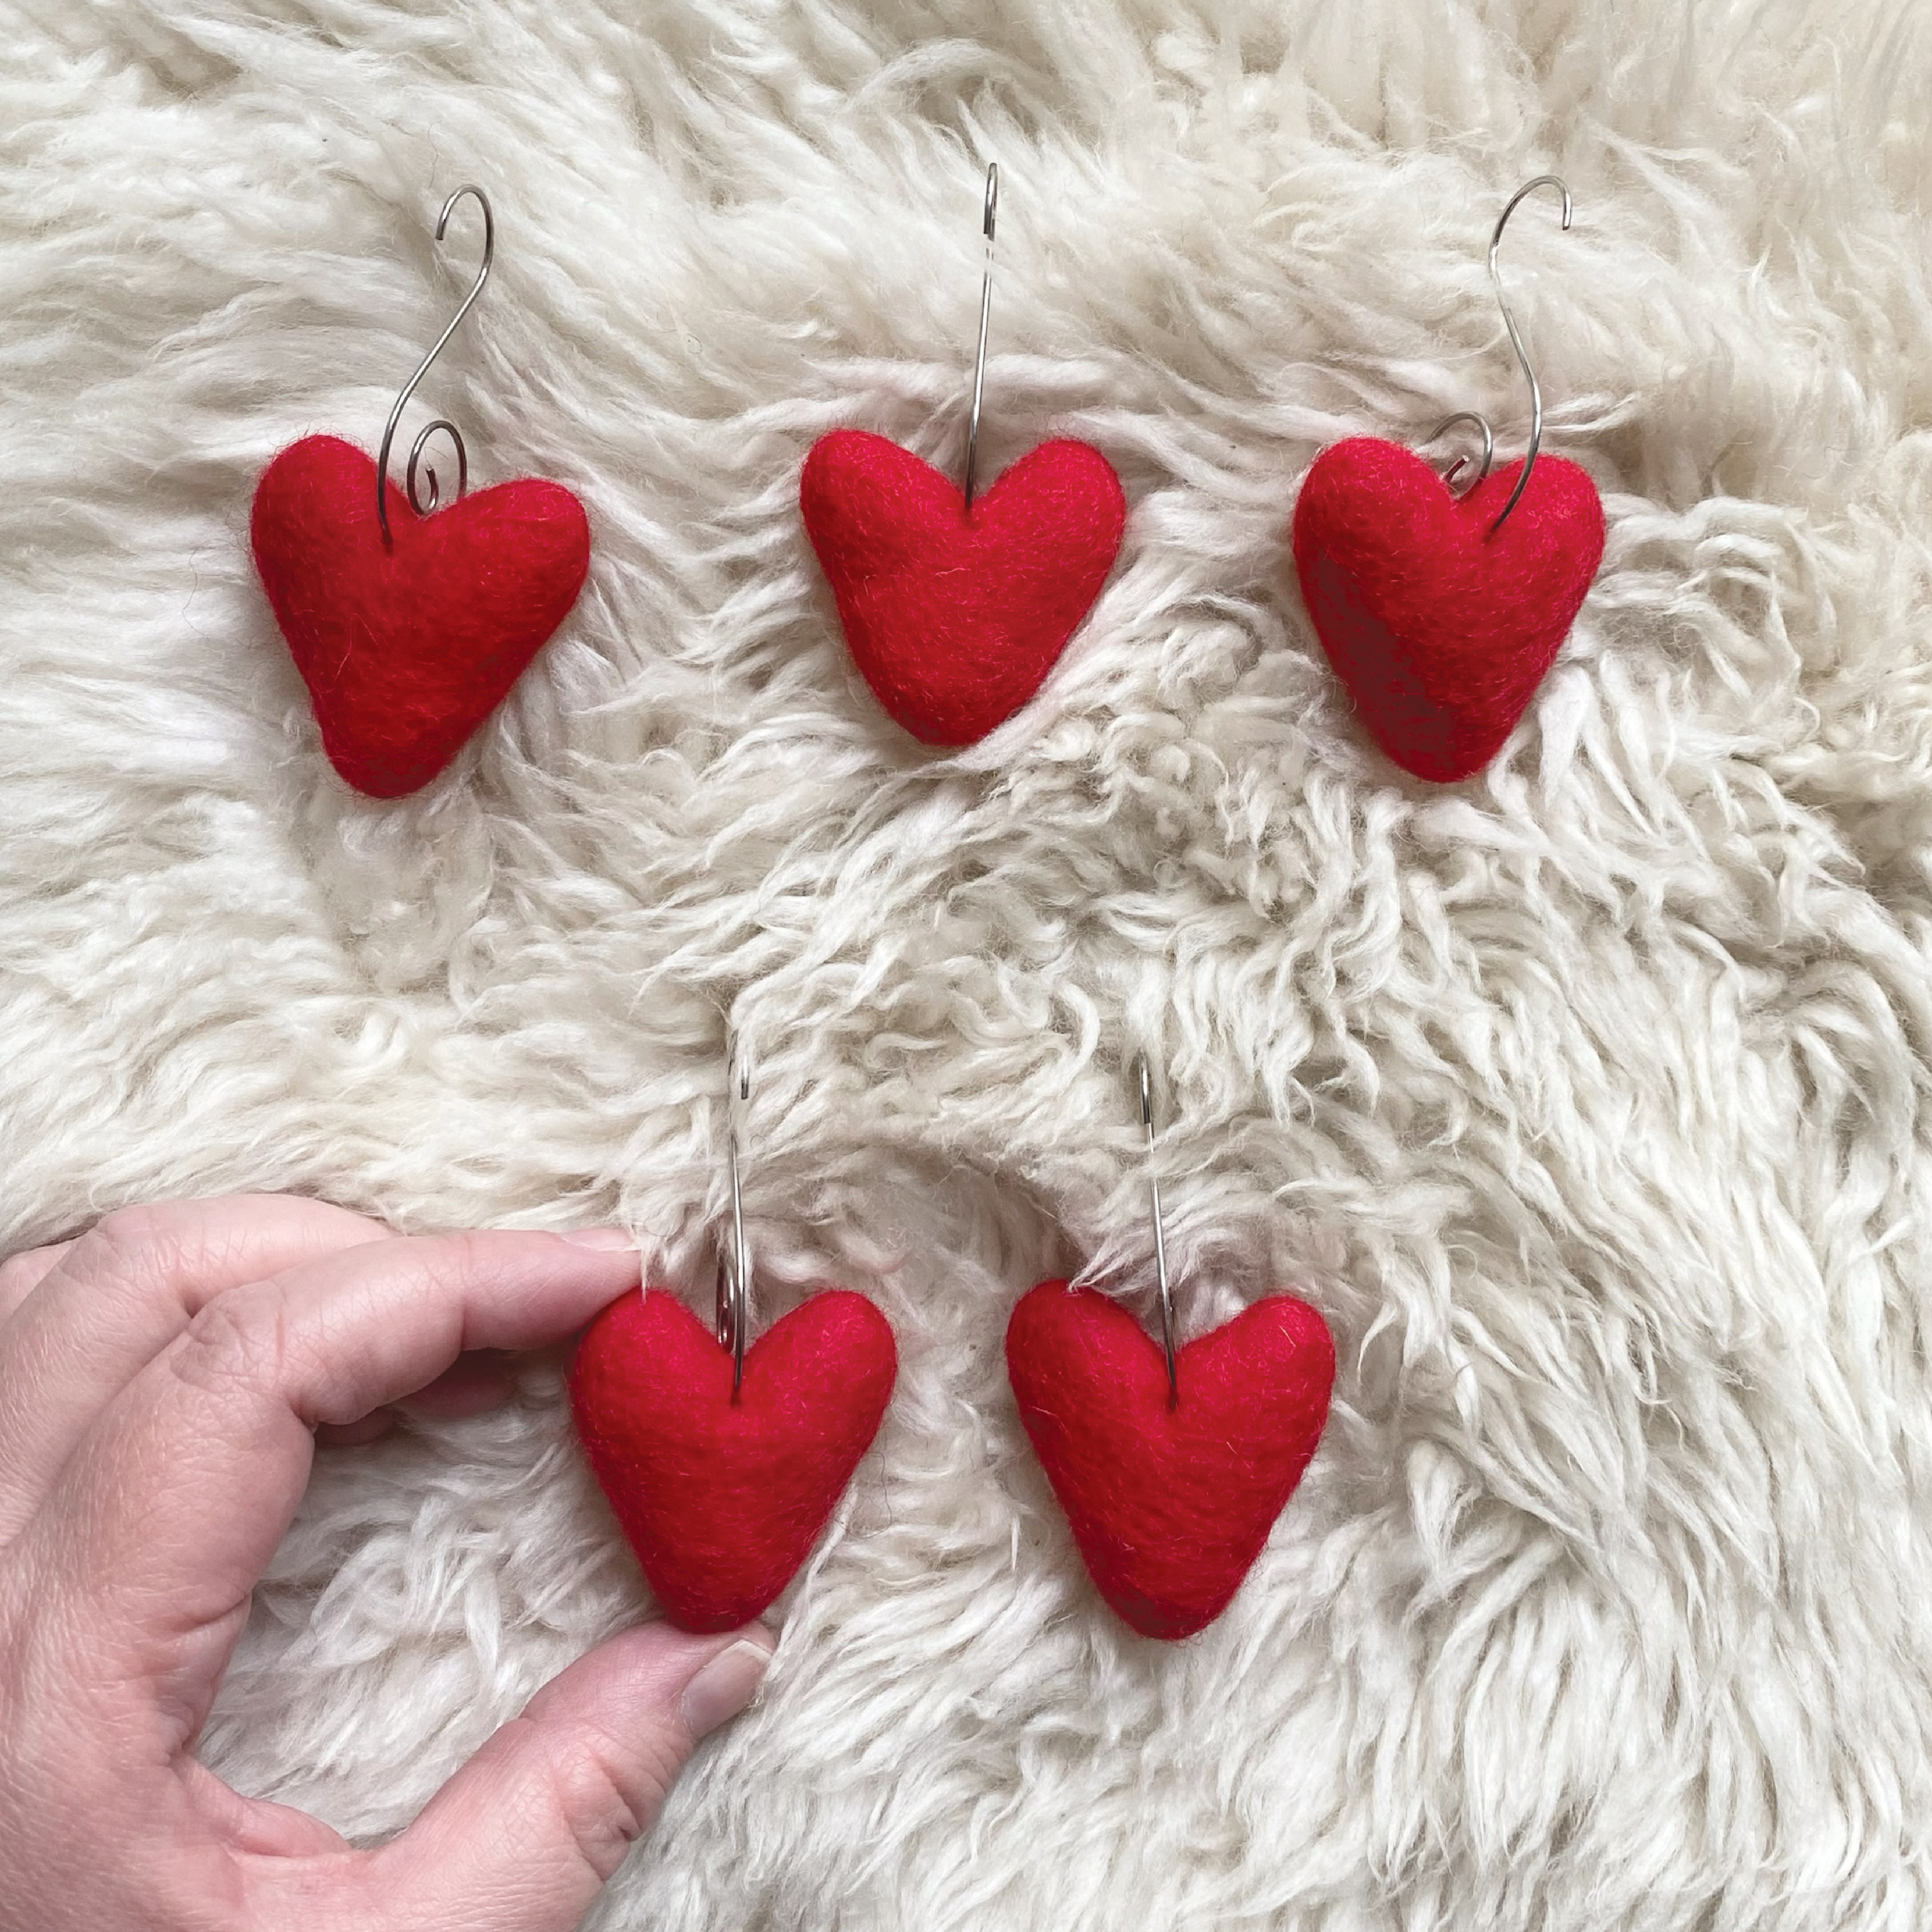 Felt Heart Ornaments (Red)  Set of 3 or 5 – Sheep Farm Felt